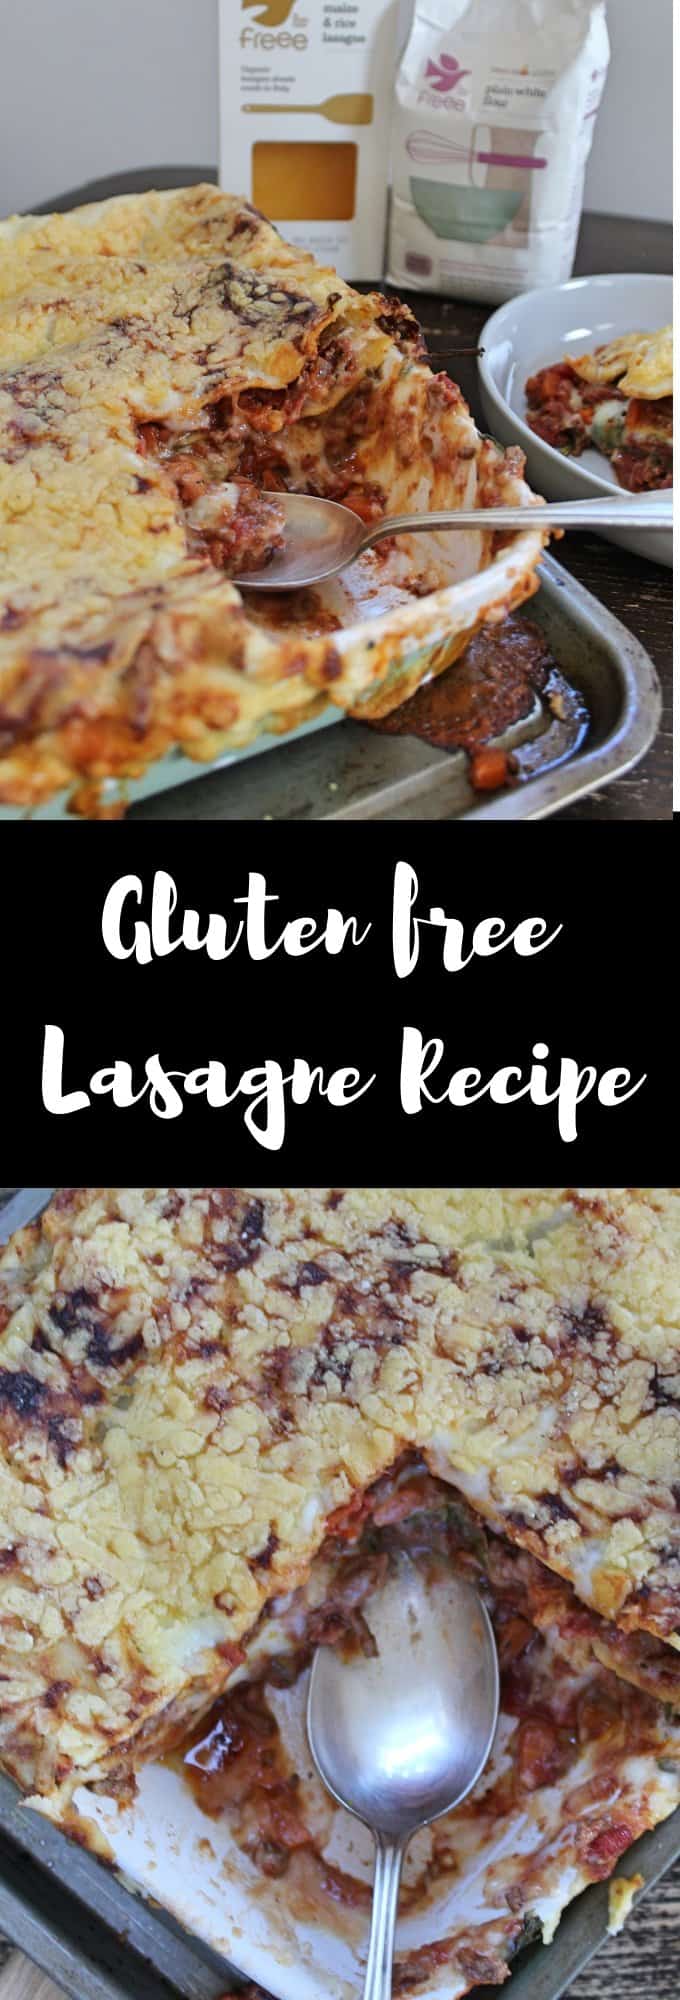 gluten free lasagne recipe with spinach coeliac celiac